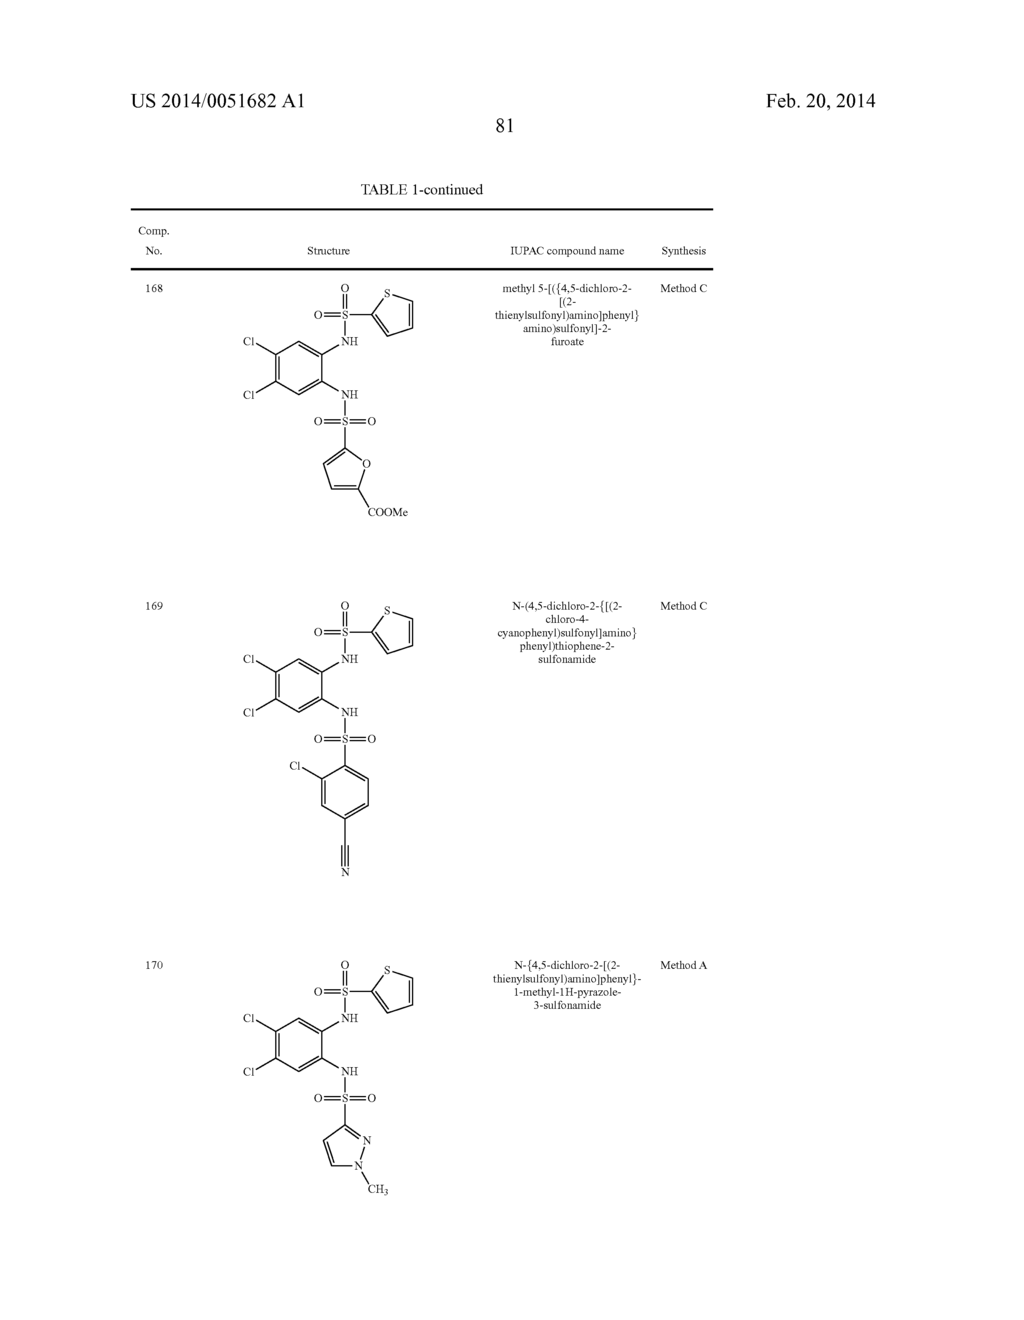 NOVEL 1,2- BIS-SULFONAMIDE DERIVATIVES AS CHEMOKINE RECEPTOR MODULATORS - diagram, schematic, and image 82